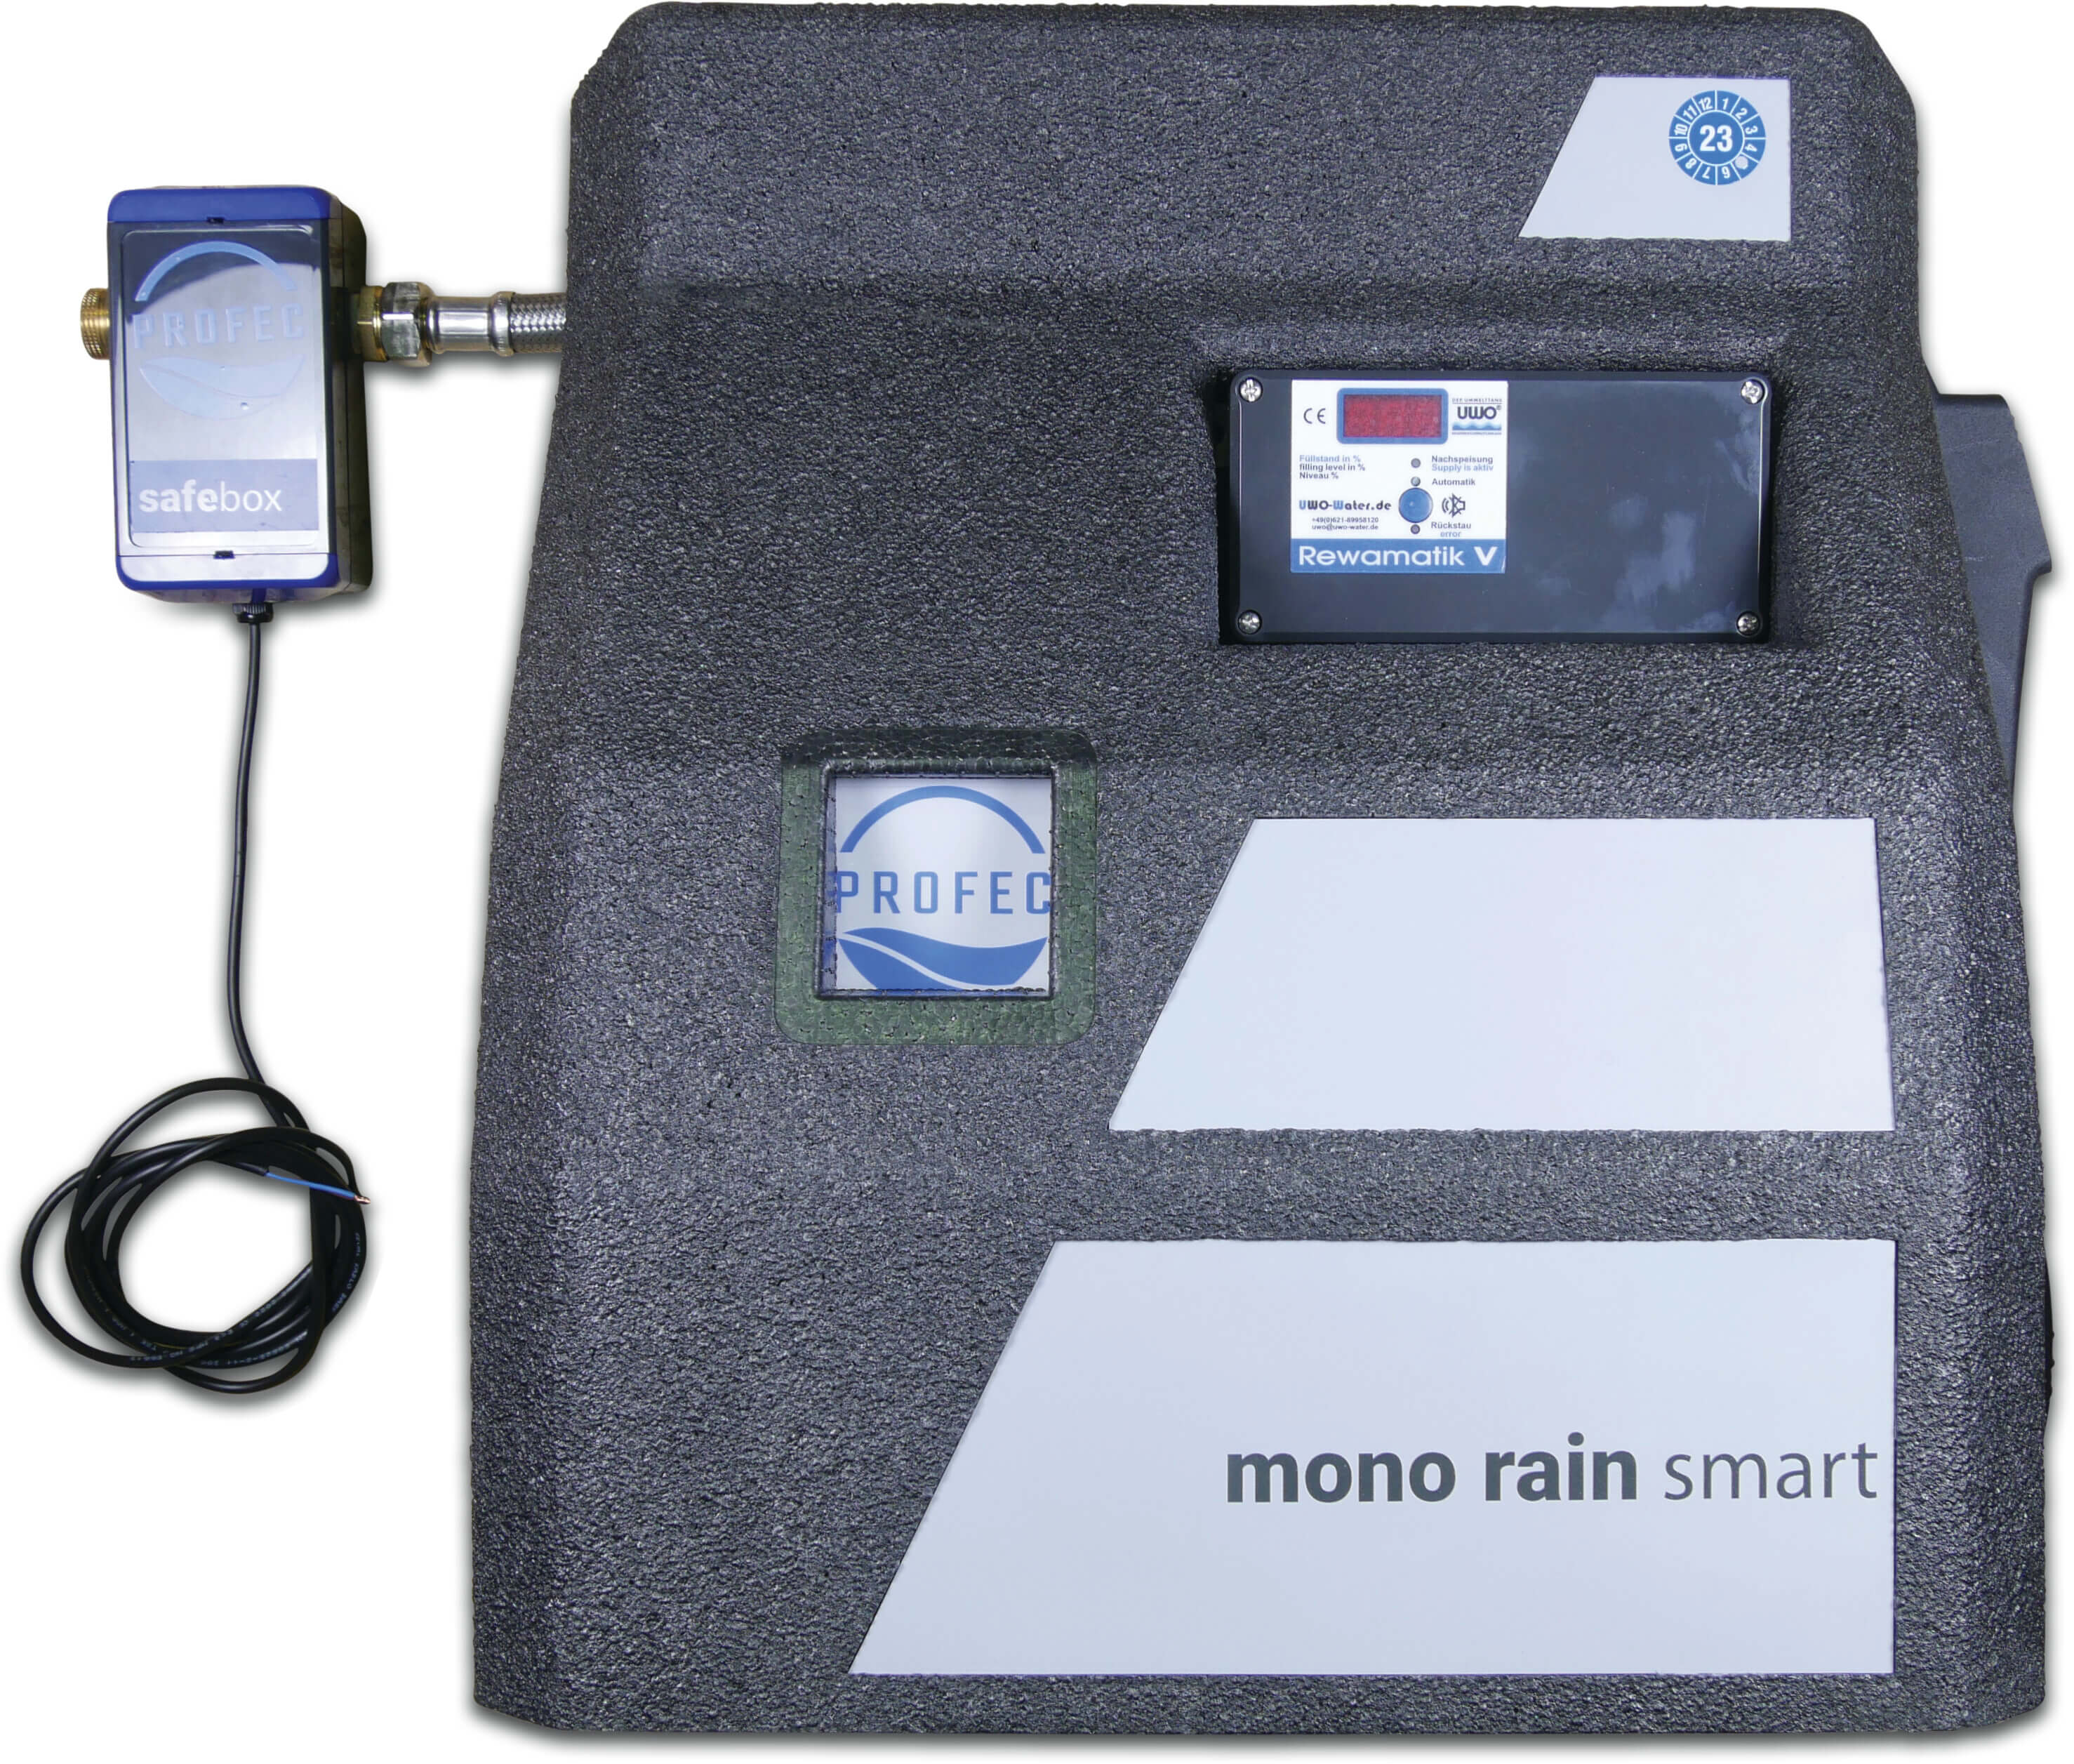 Profec Regenwatervoorzieningsmanager 4bar DVGW type Mono rain smart with self priming pump including smart control